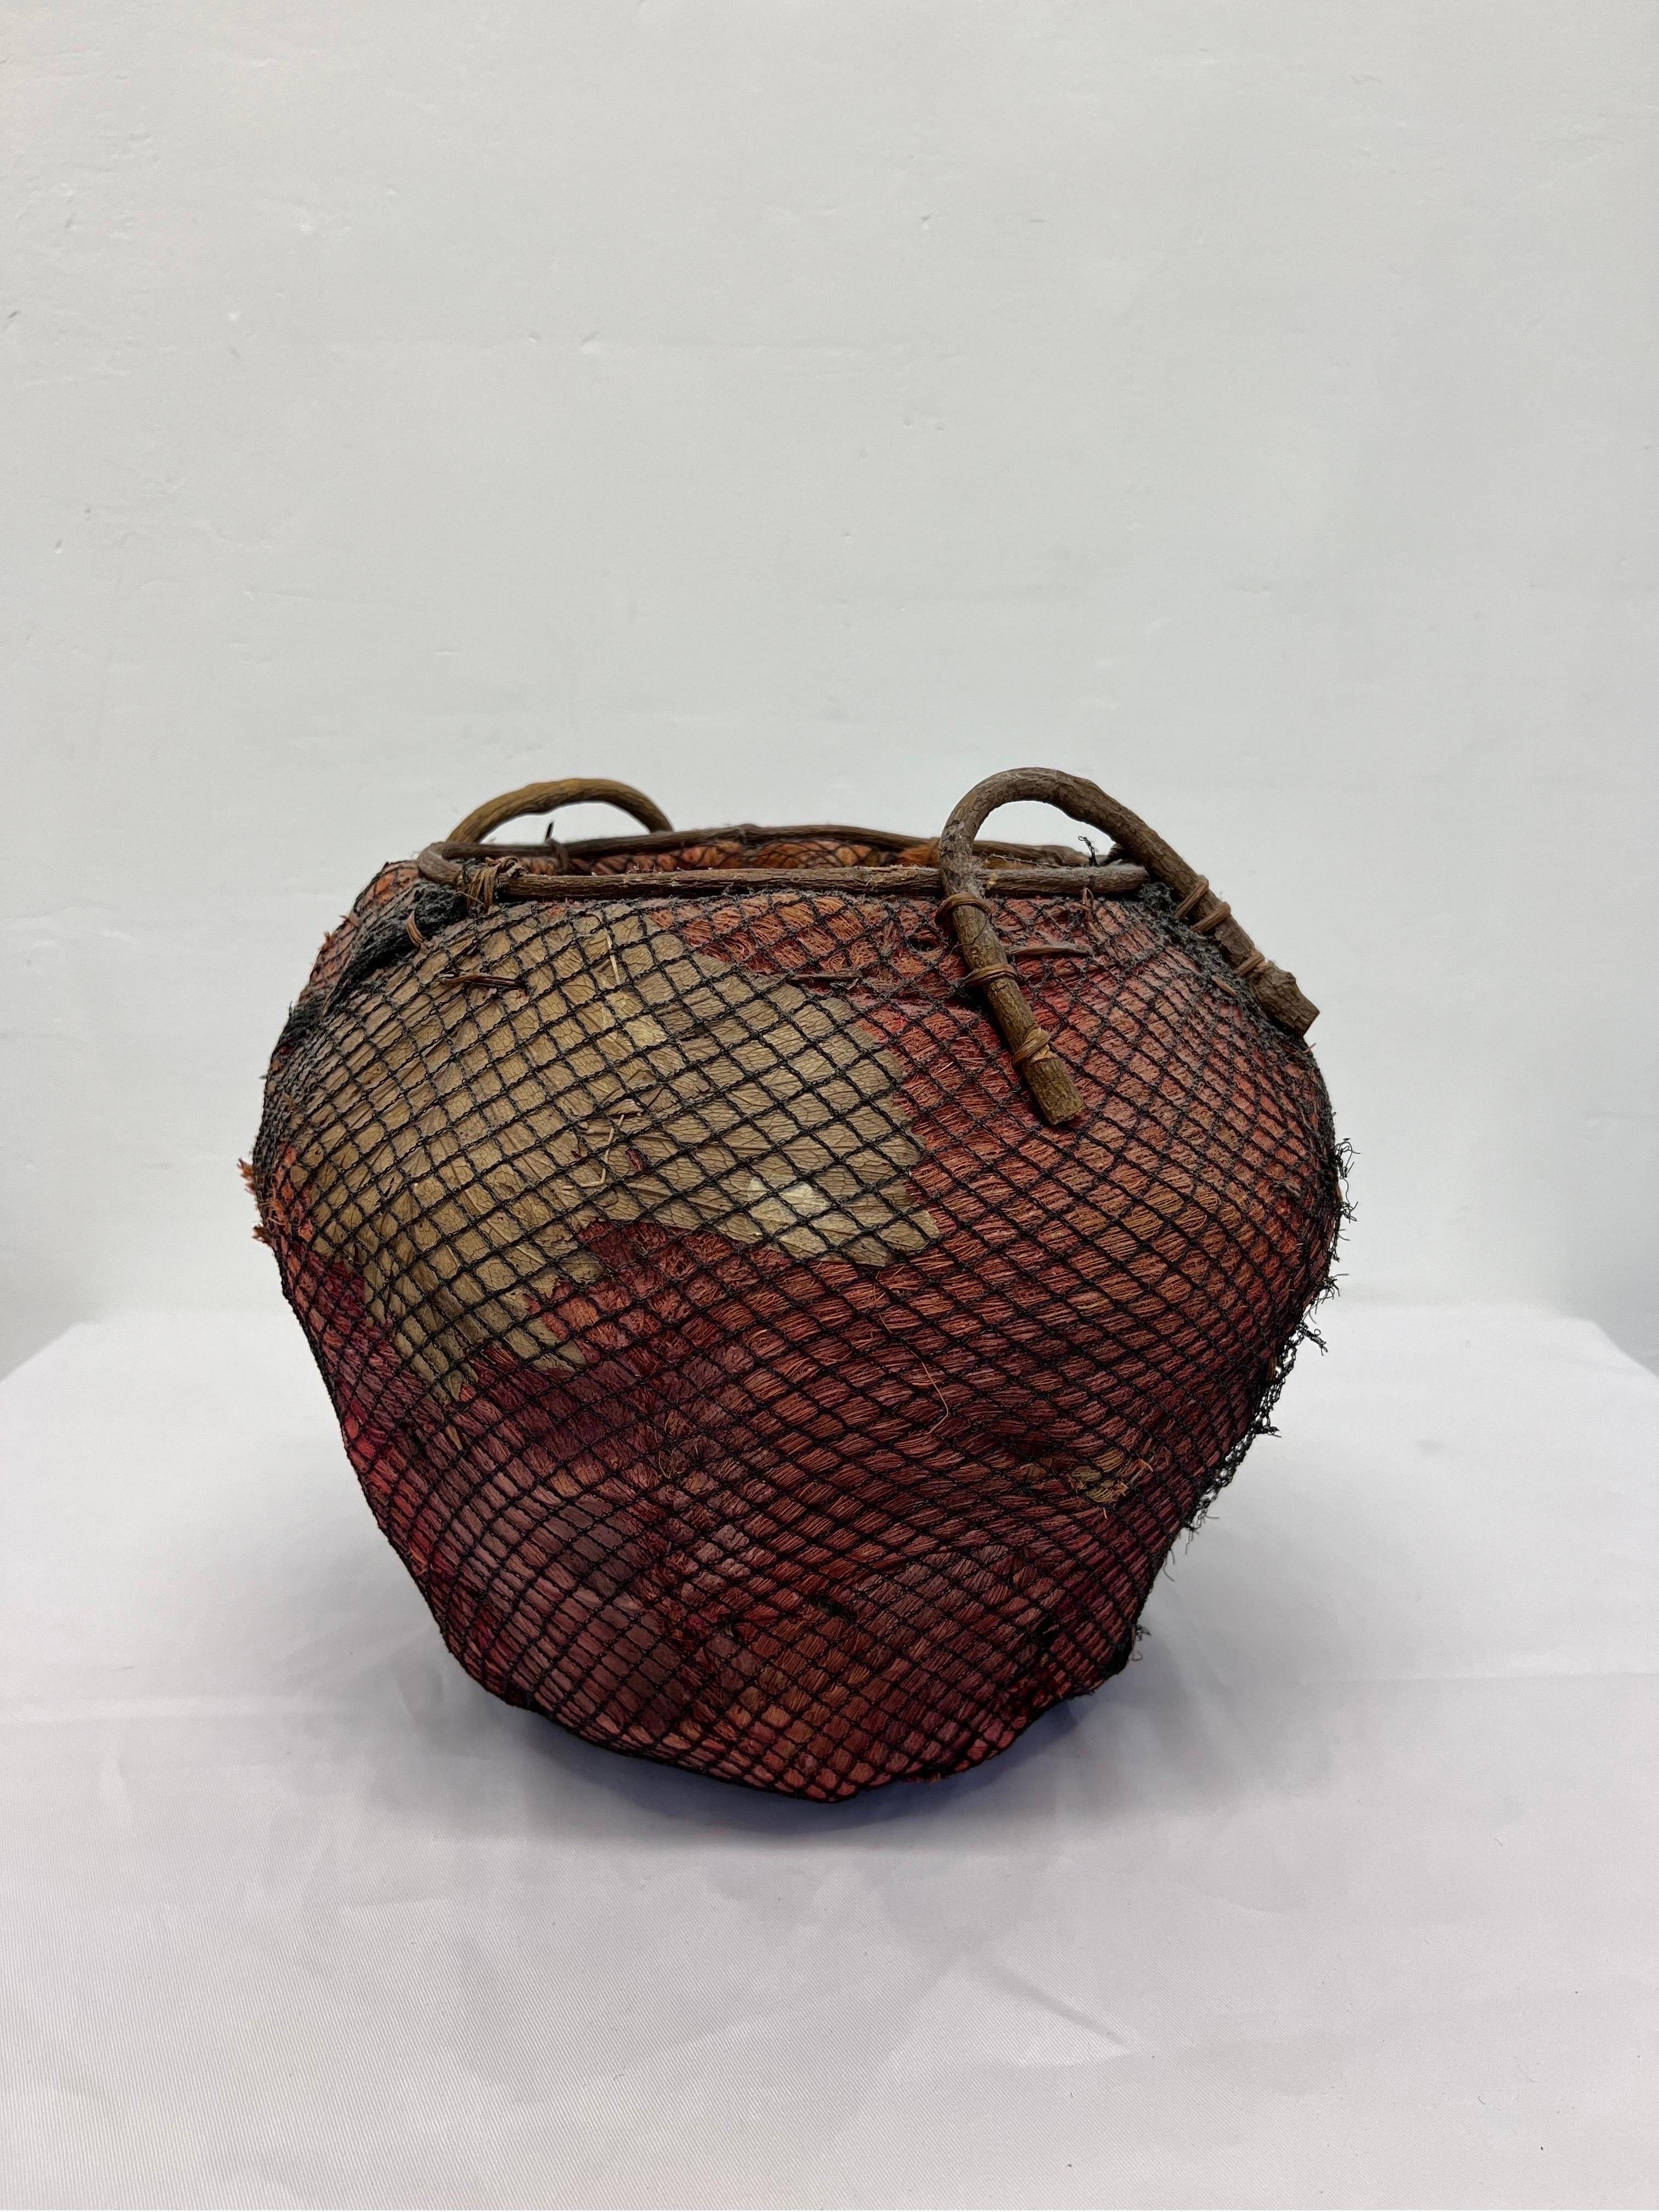 fishnet bag philippines